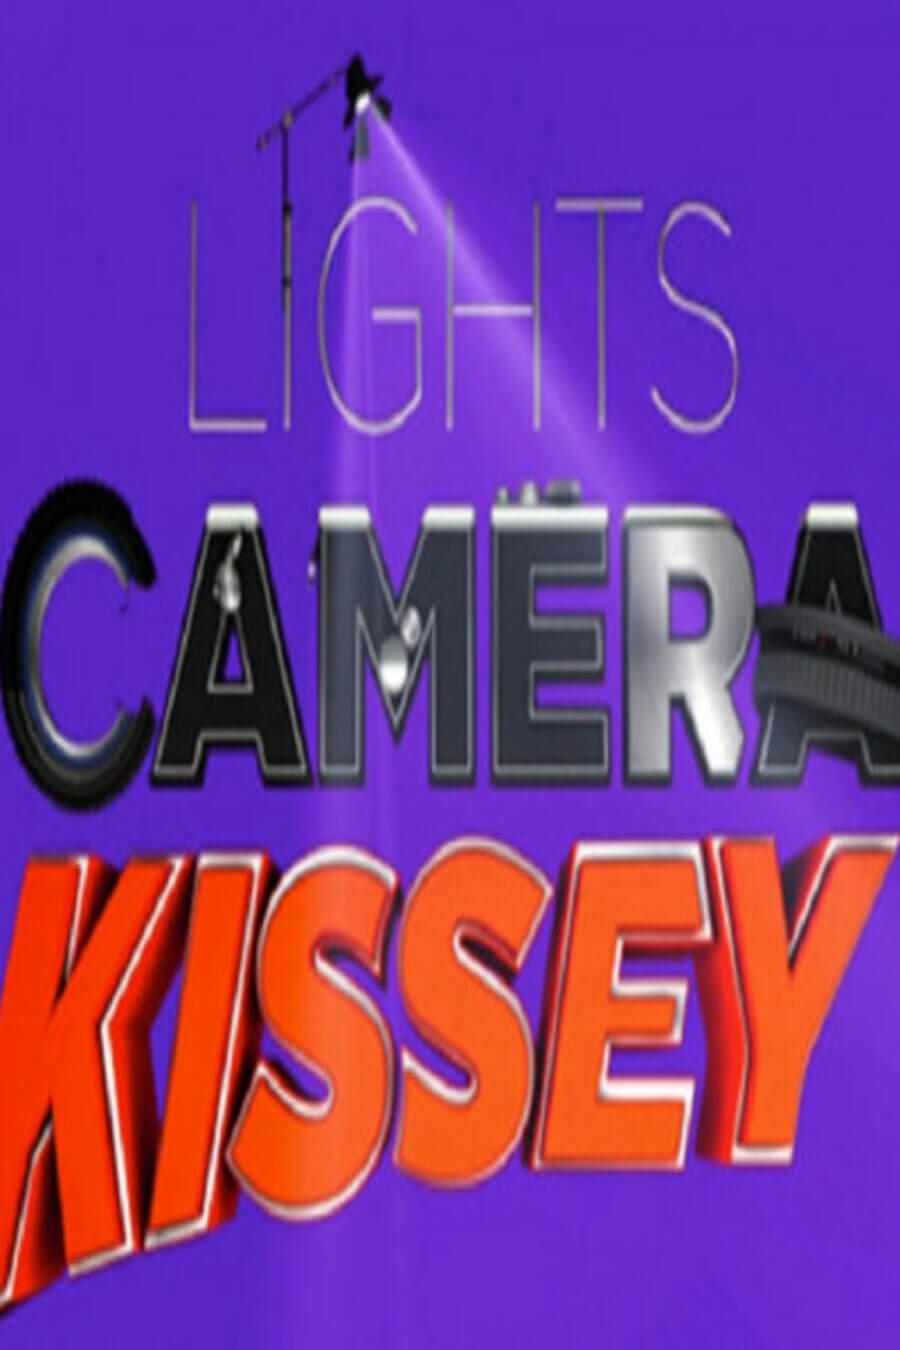 TV ratings for Lights Camera Kissey in Italia. SonyLIV TV series